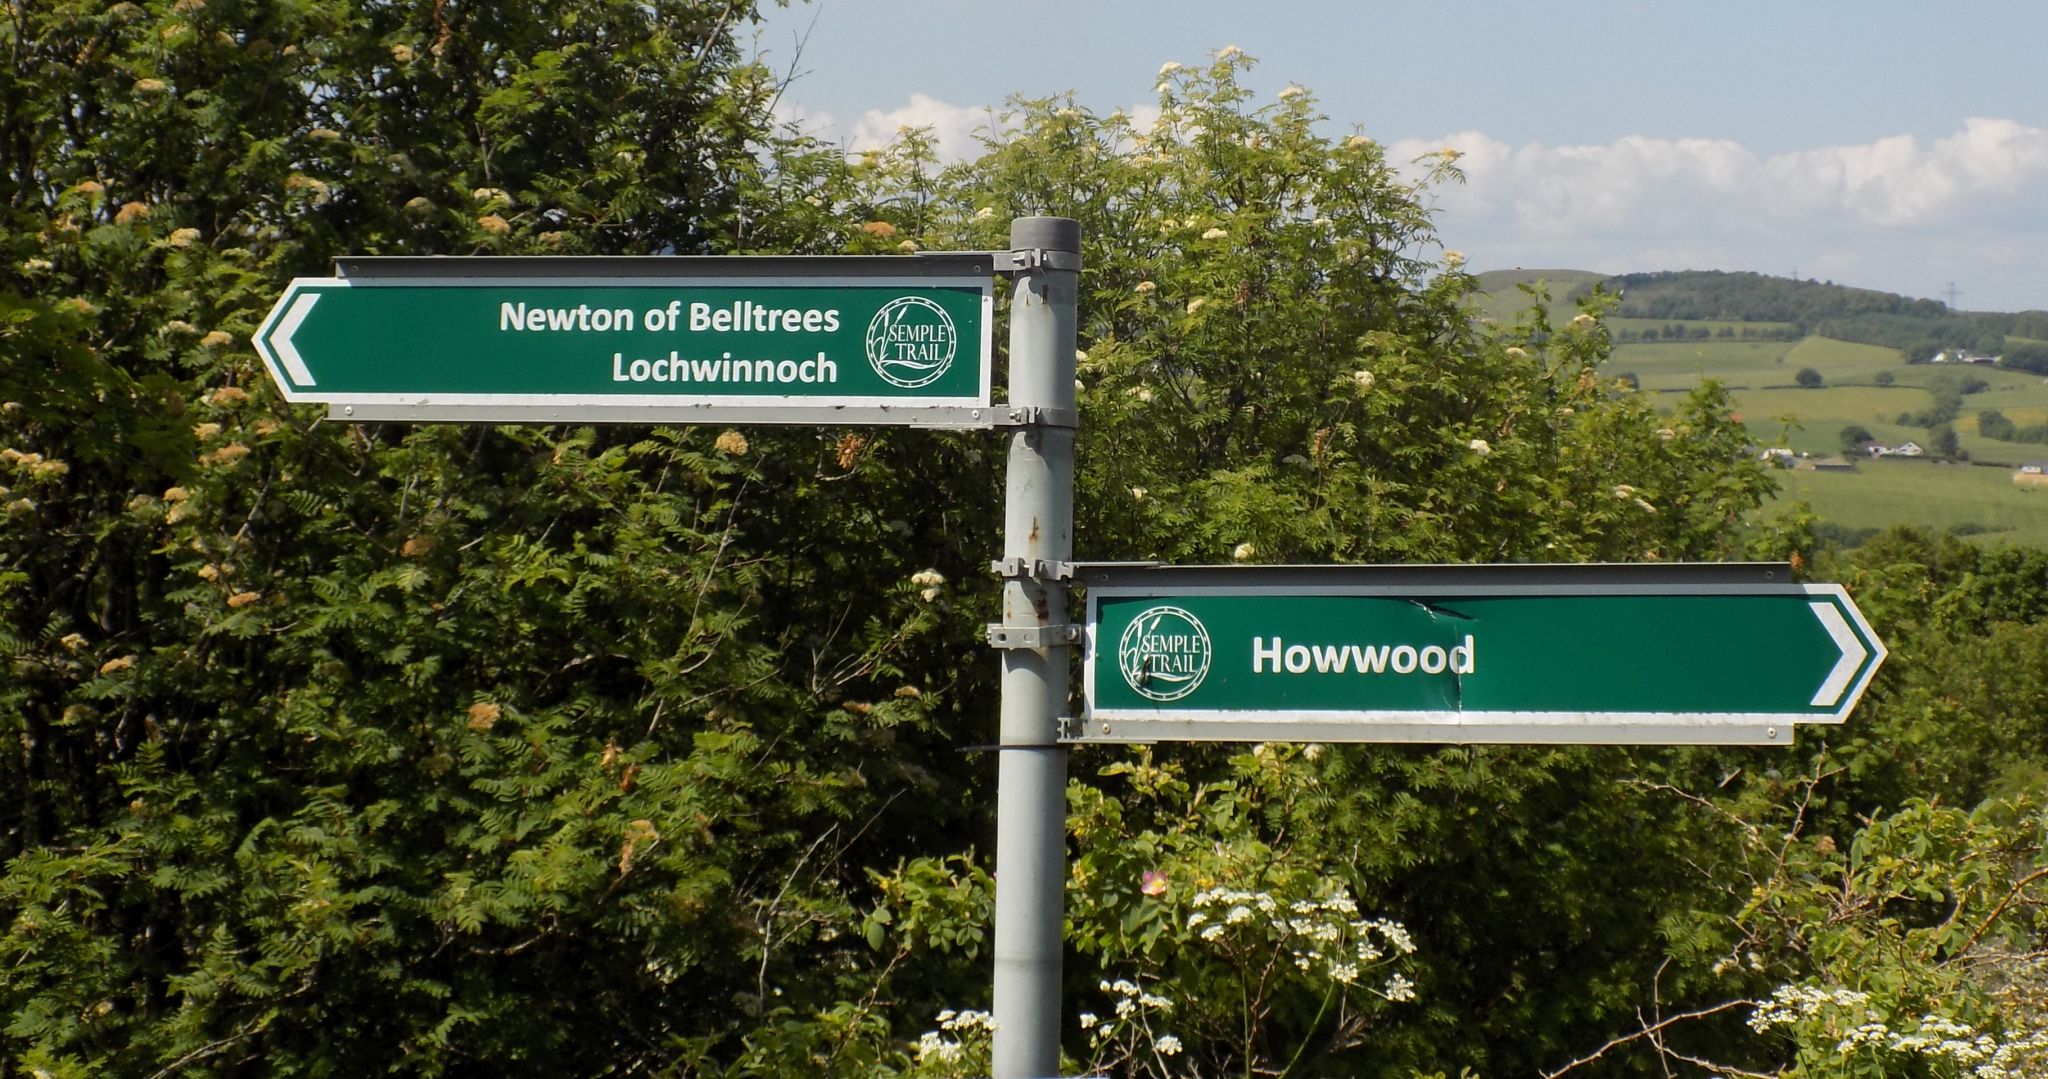 Trail to Lochwinnoch above Howwood